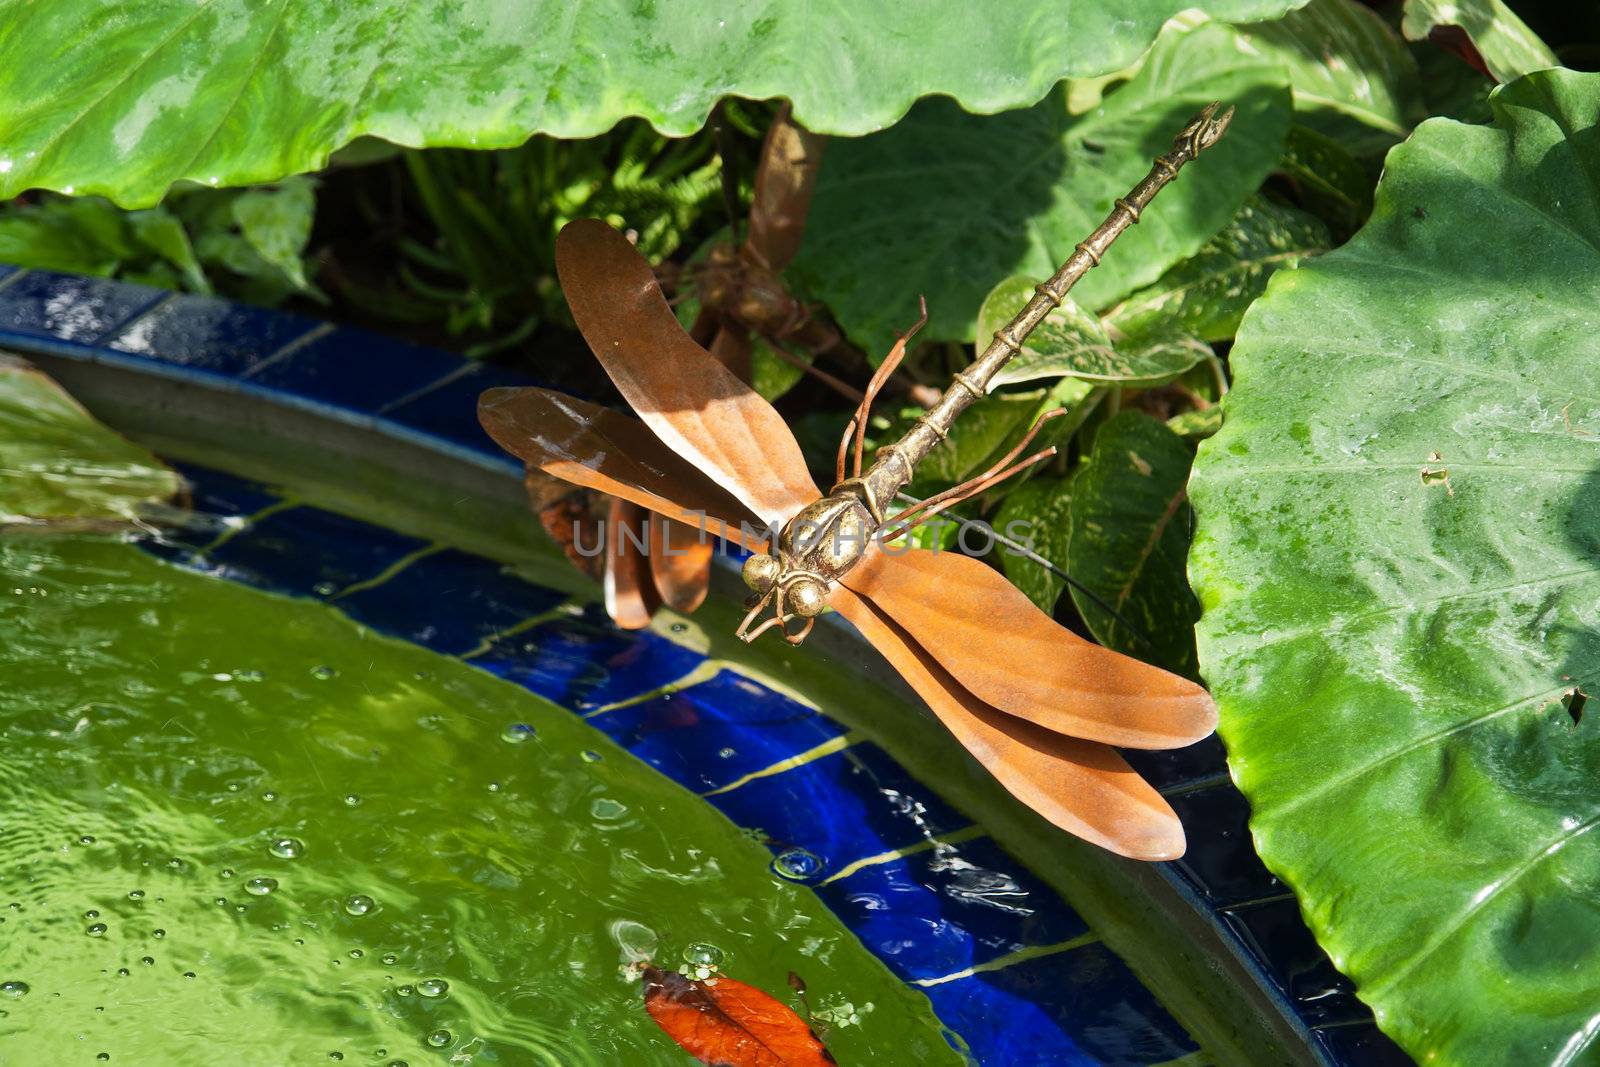 A metal dragonfly statue in a beautiful lush green garden